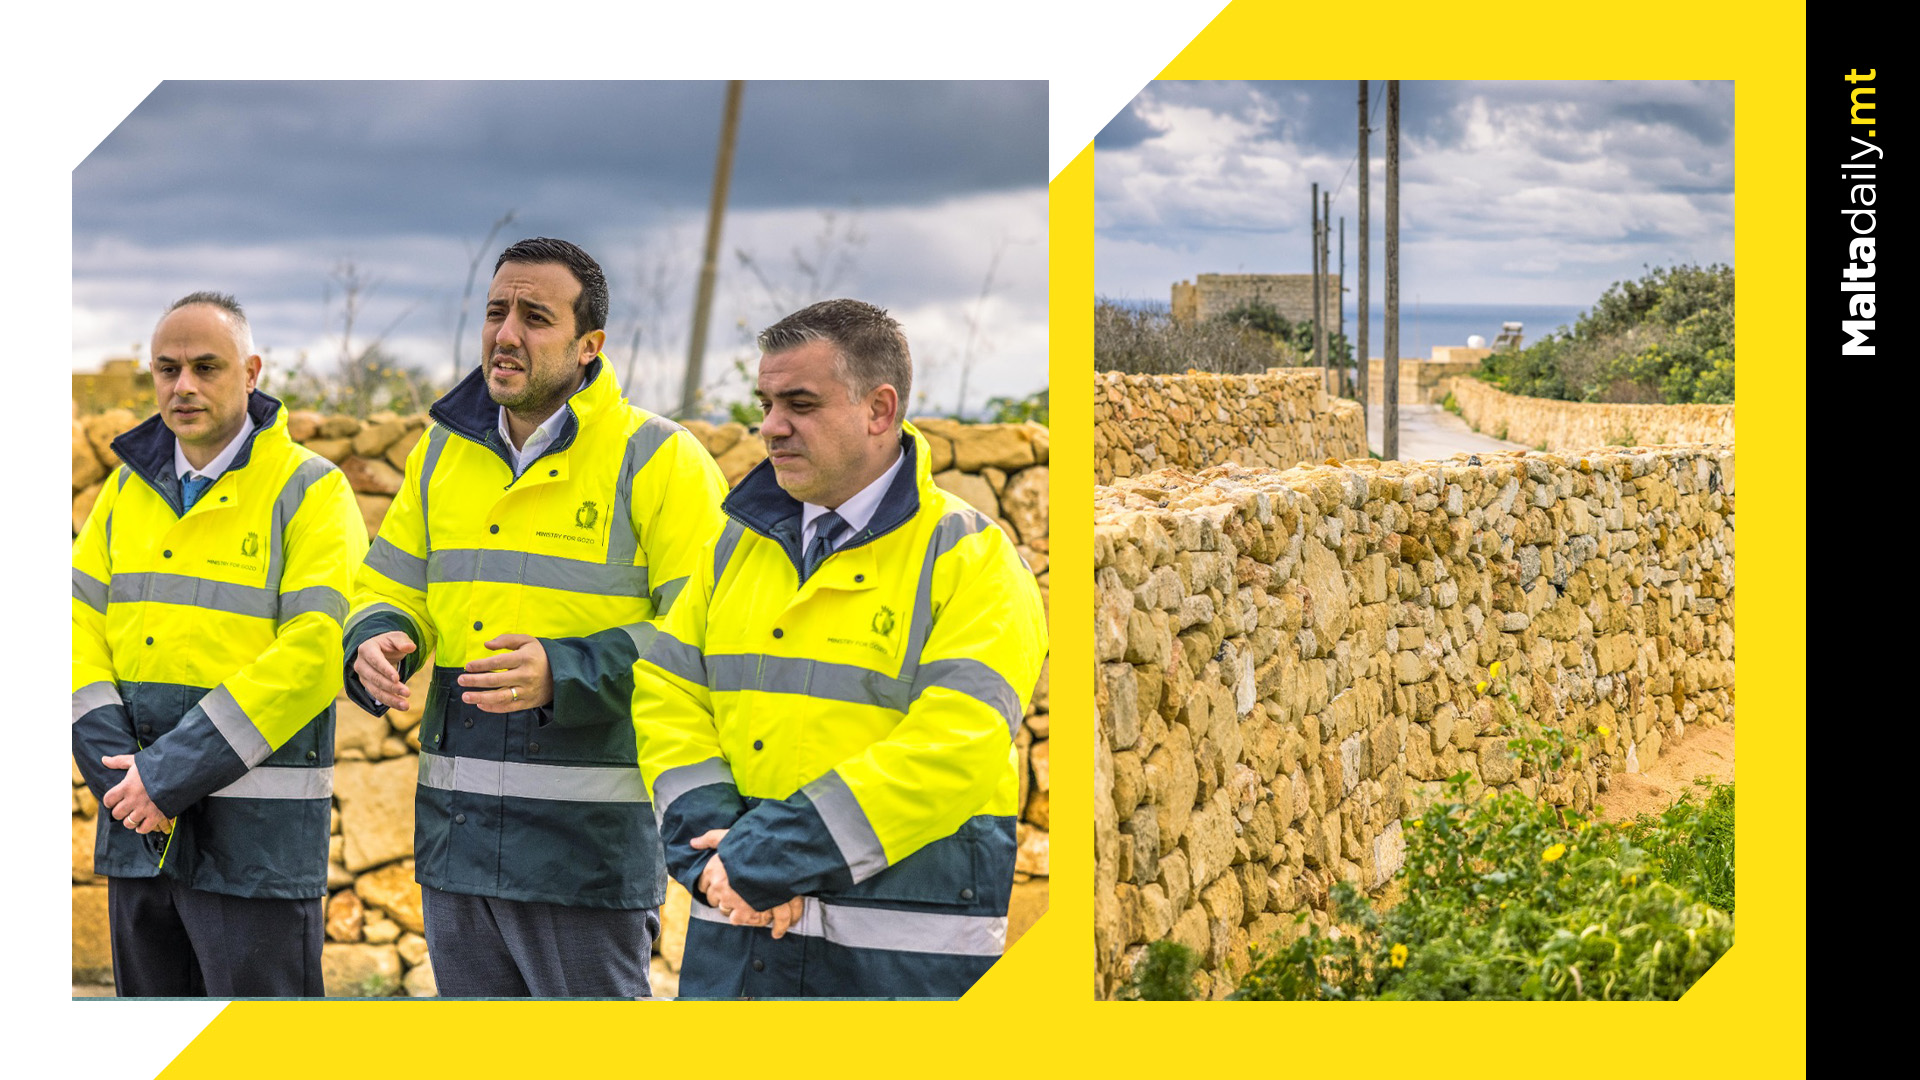 'Ħitan tas-sejjieħ' restoration project in Gozo completed; €10 million in EU funds spent